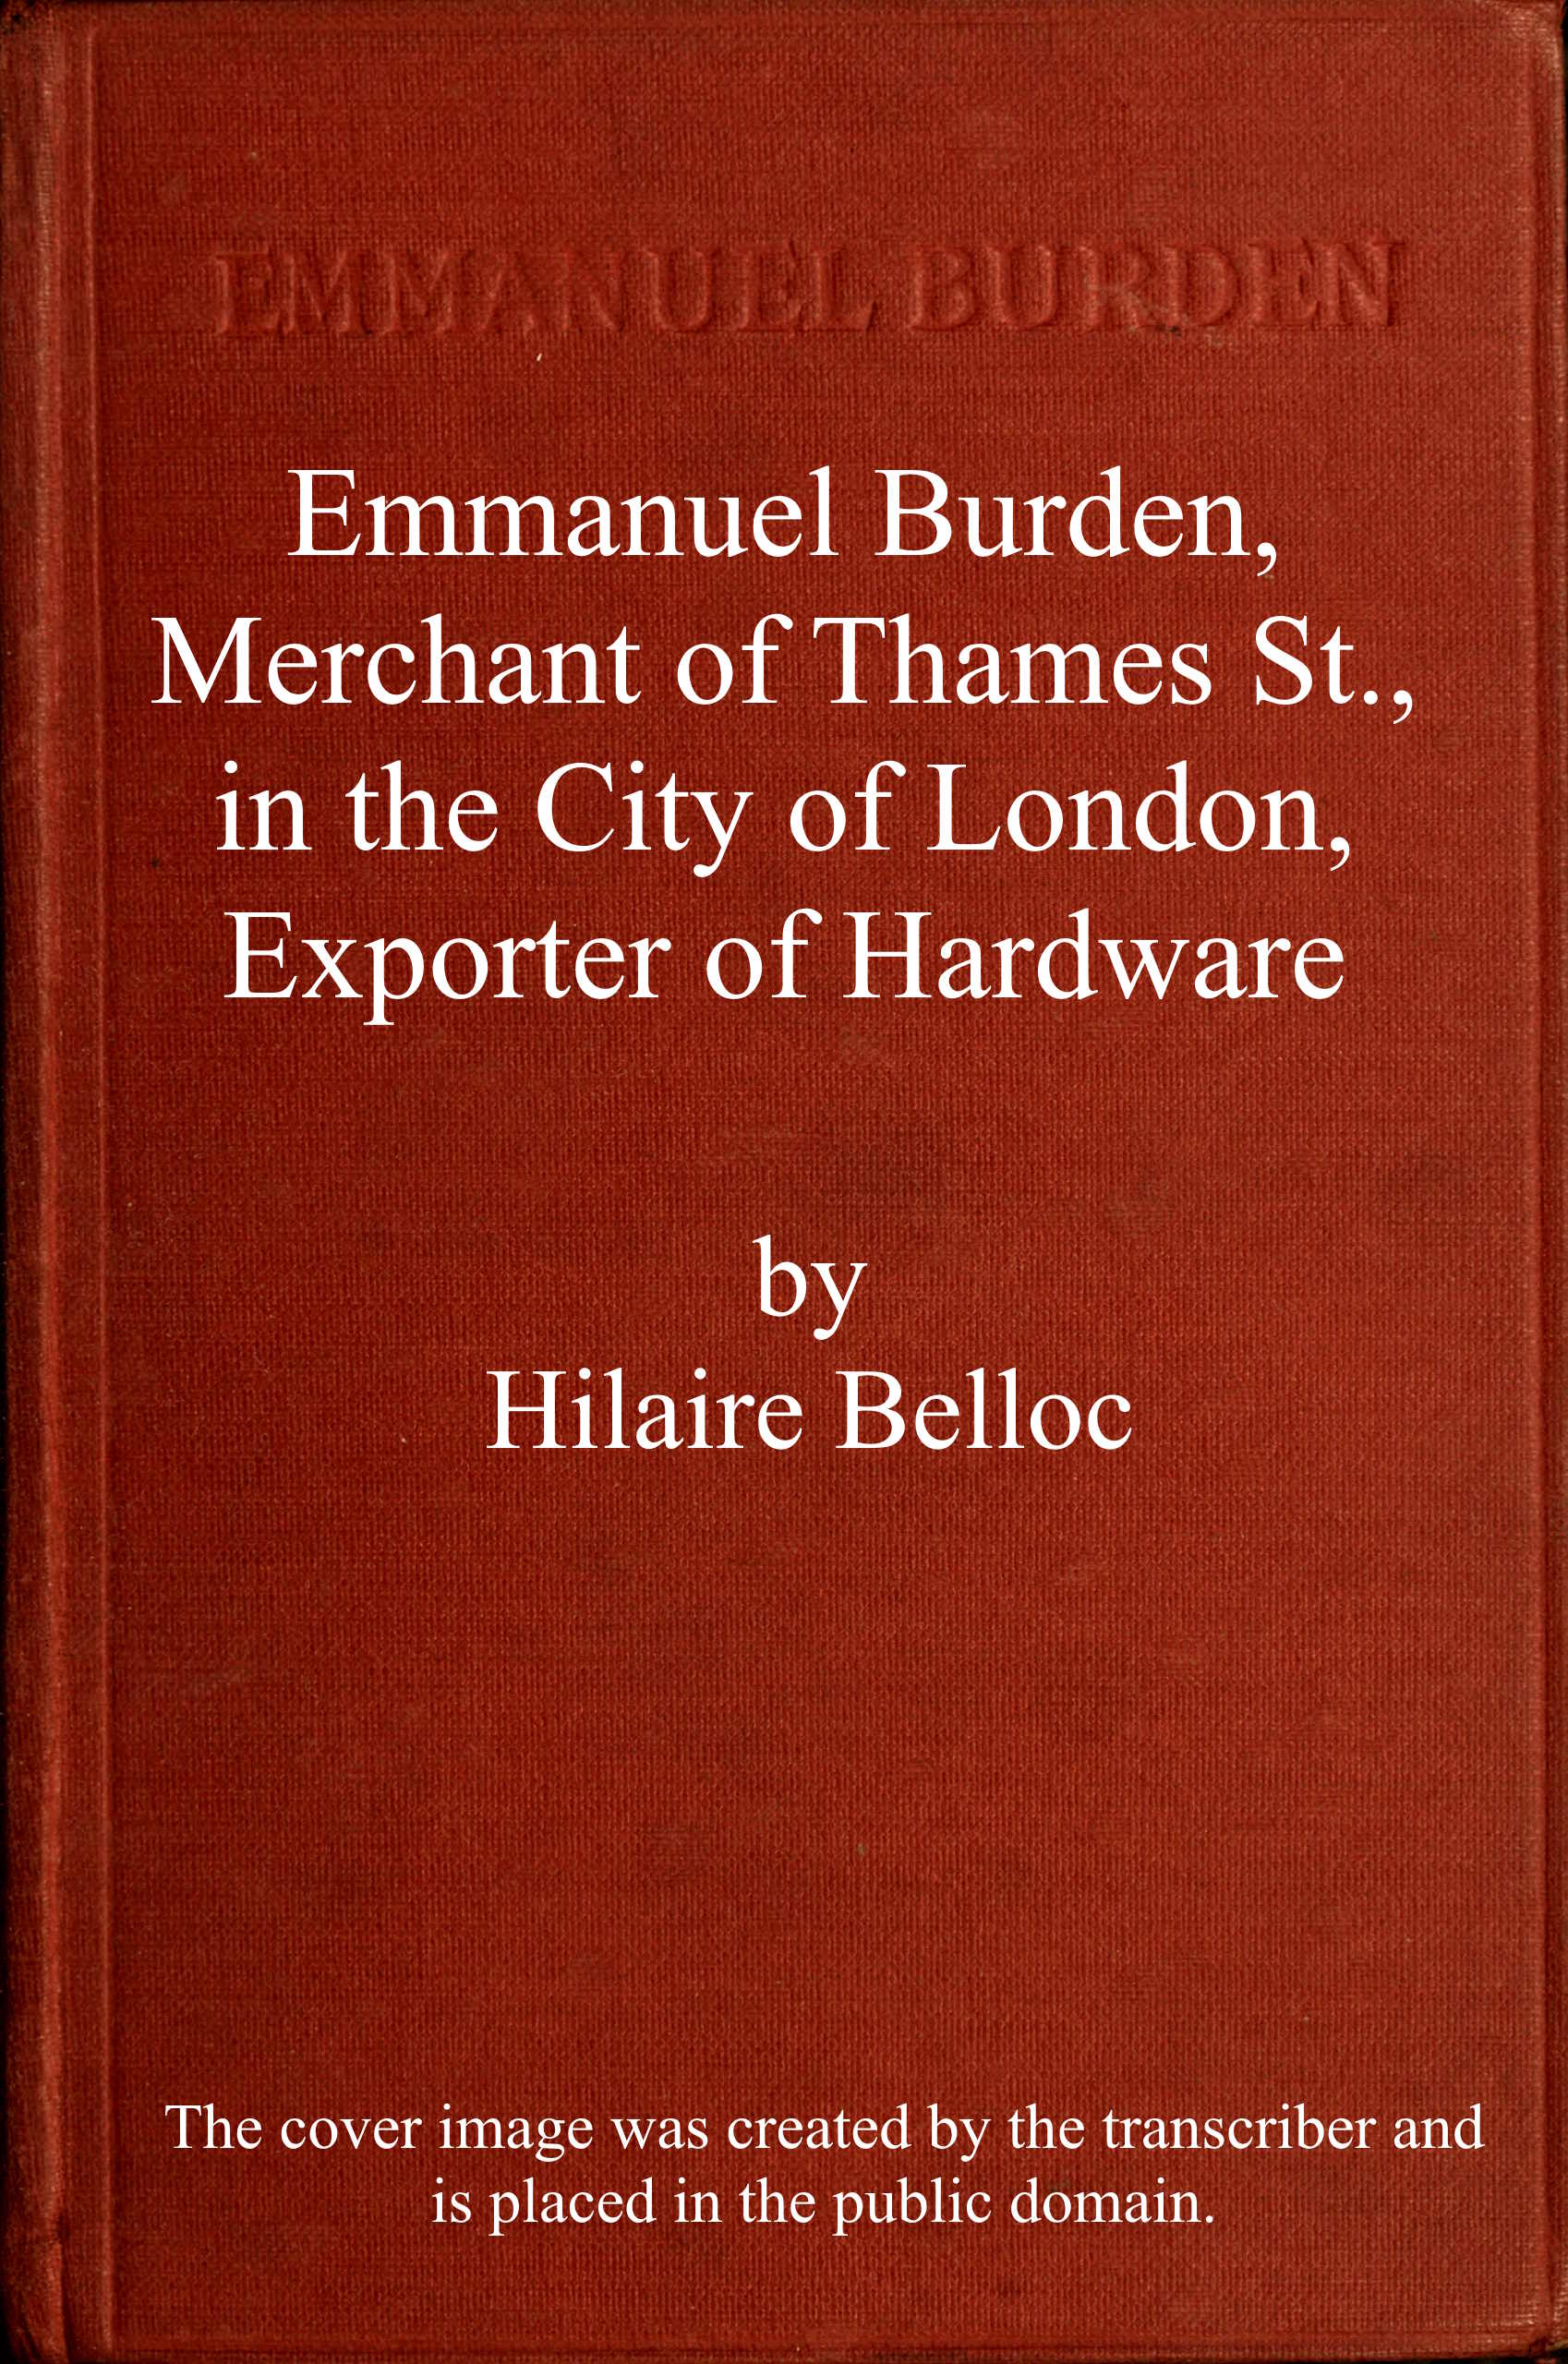 Emmanuel Burden, merchant, of Thames St., in the city of London, exporter of hardware